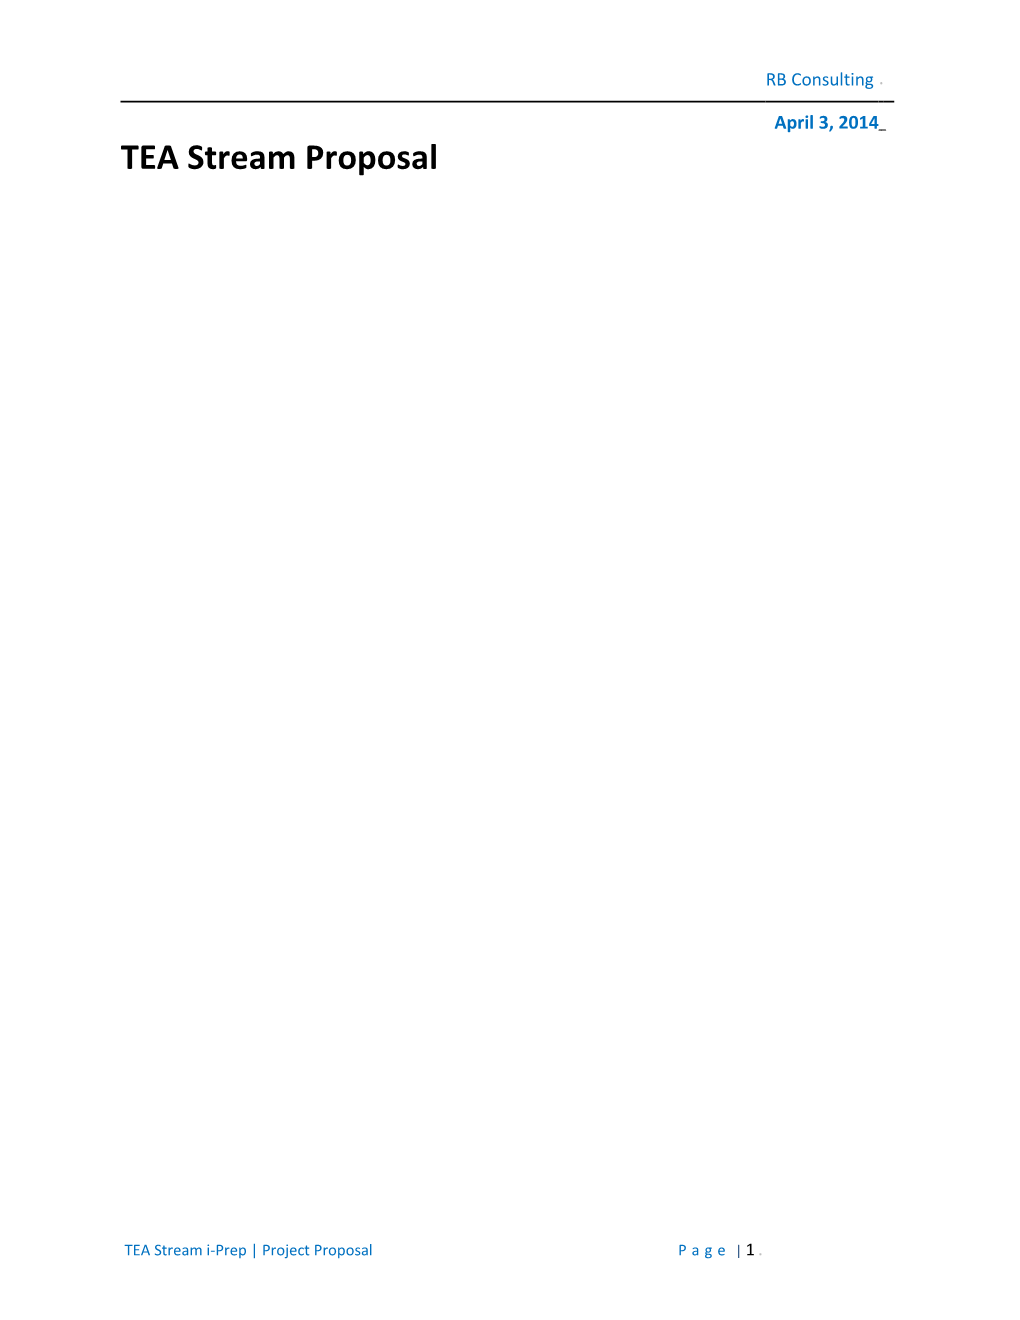 TEA Stream Proposal